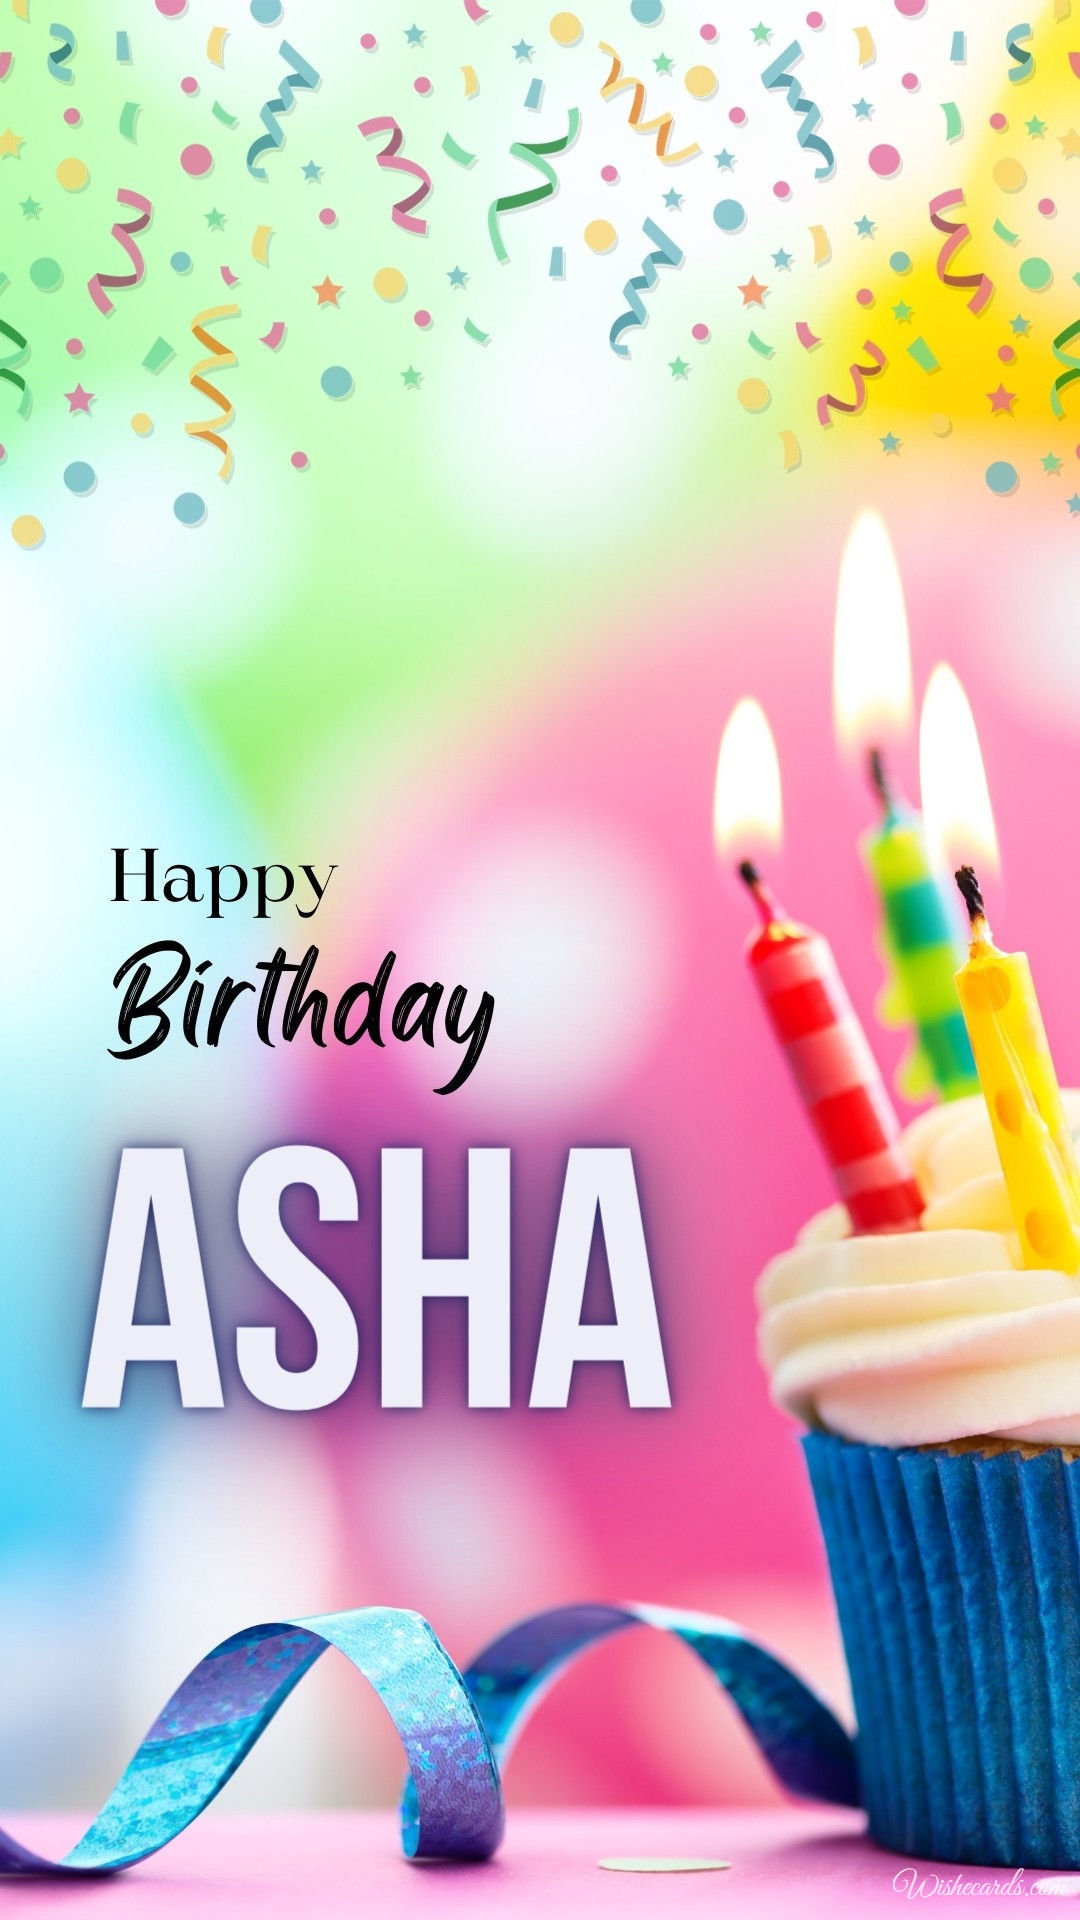 Happy Birthday Asha Cake Image